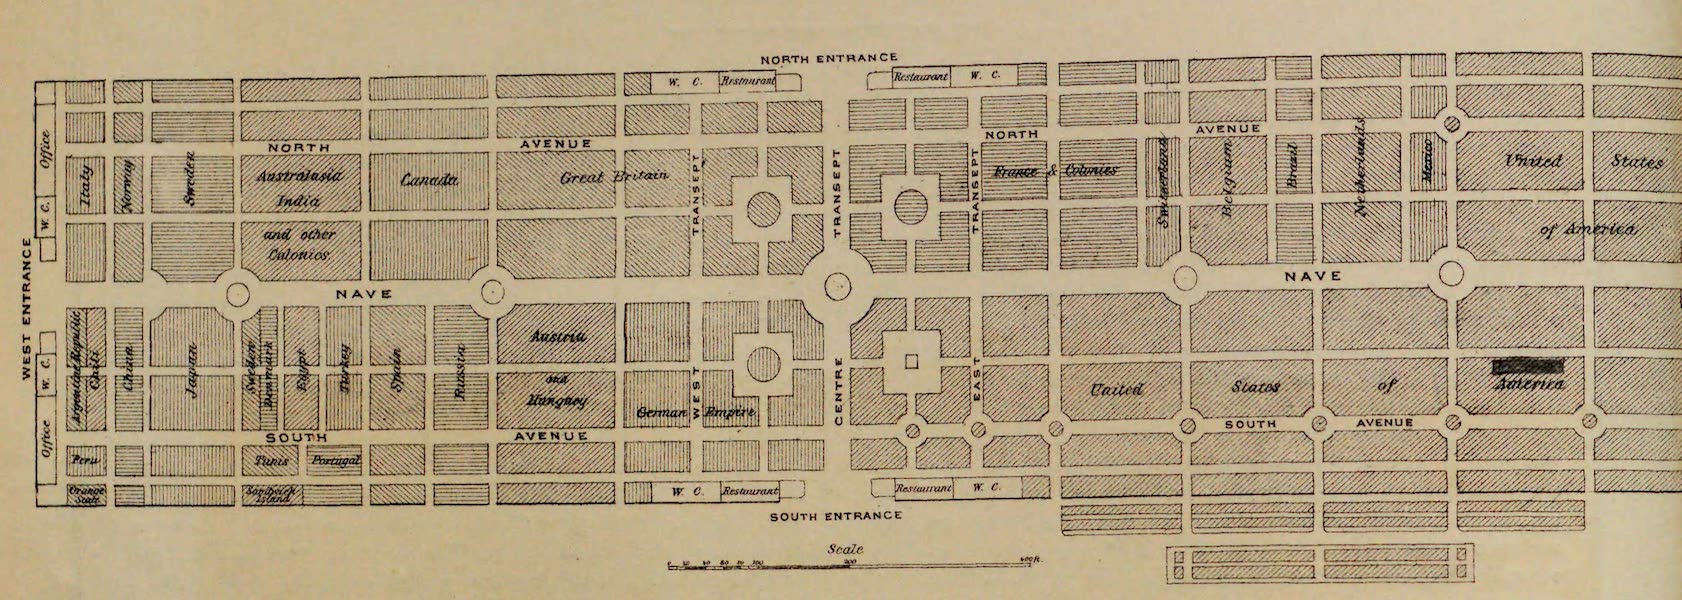 Centennial Portfolio - Ground Plan of Main Building (1876)